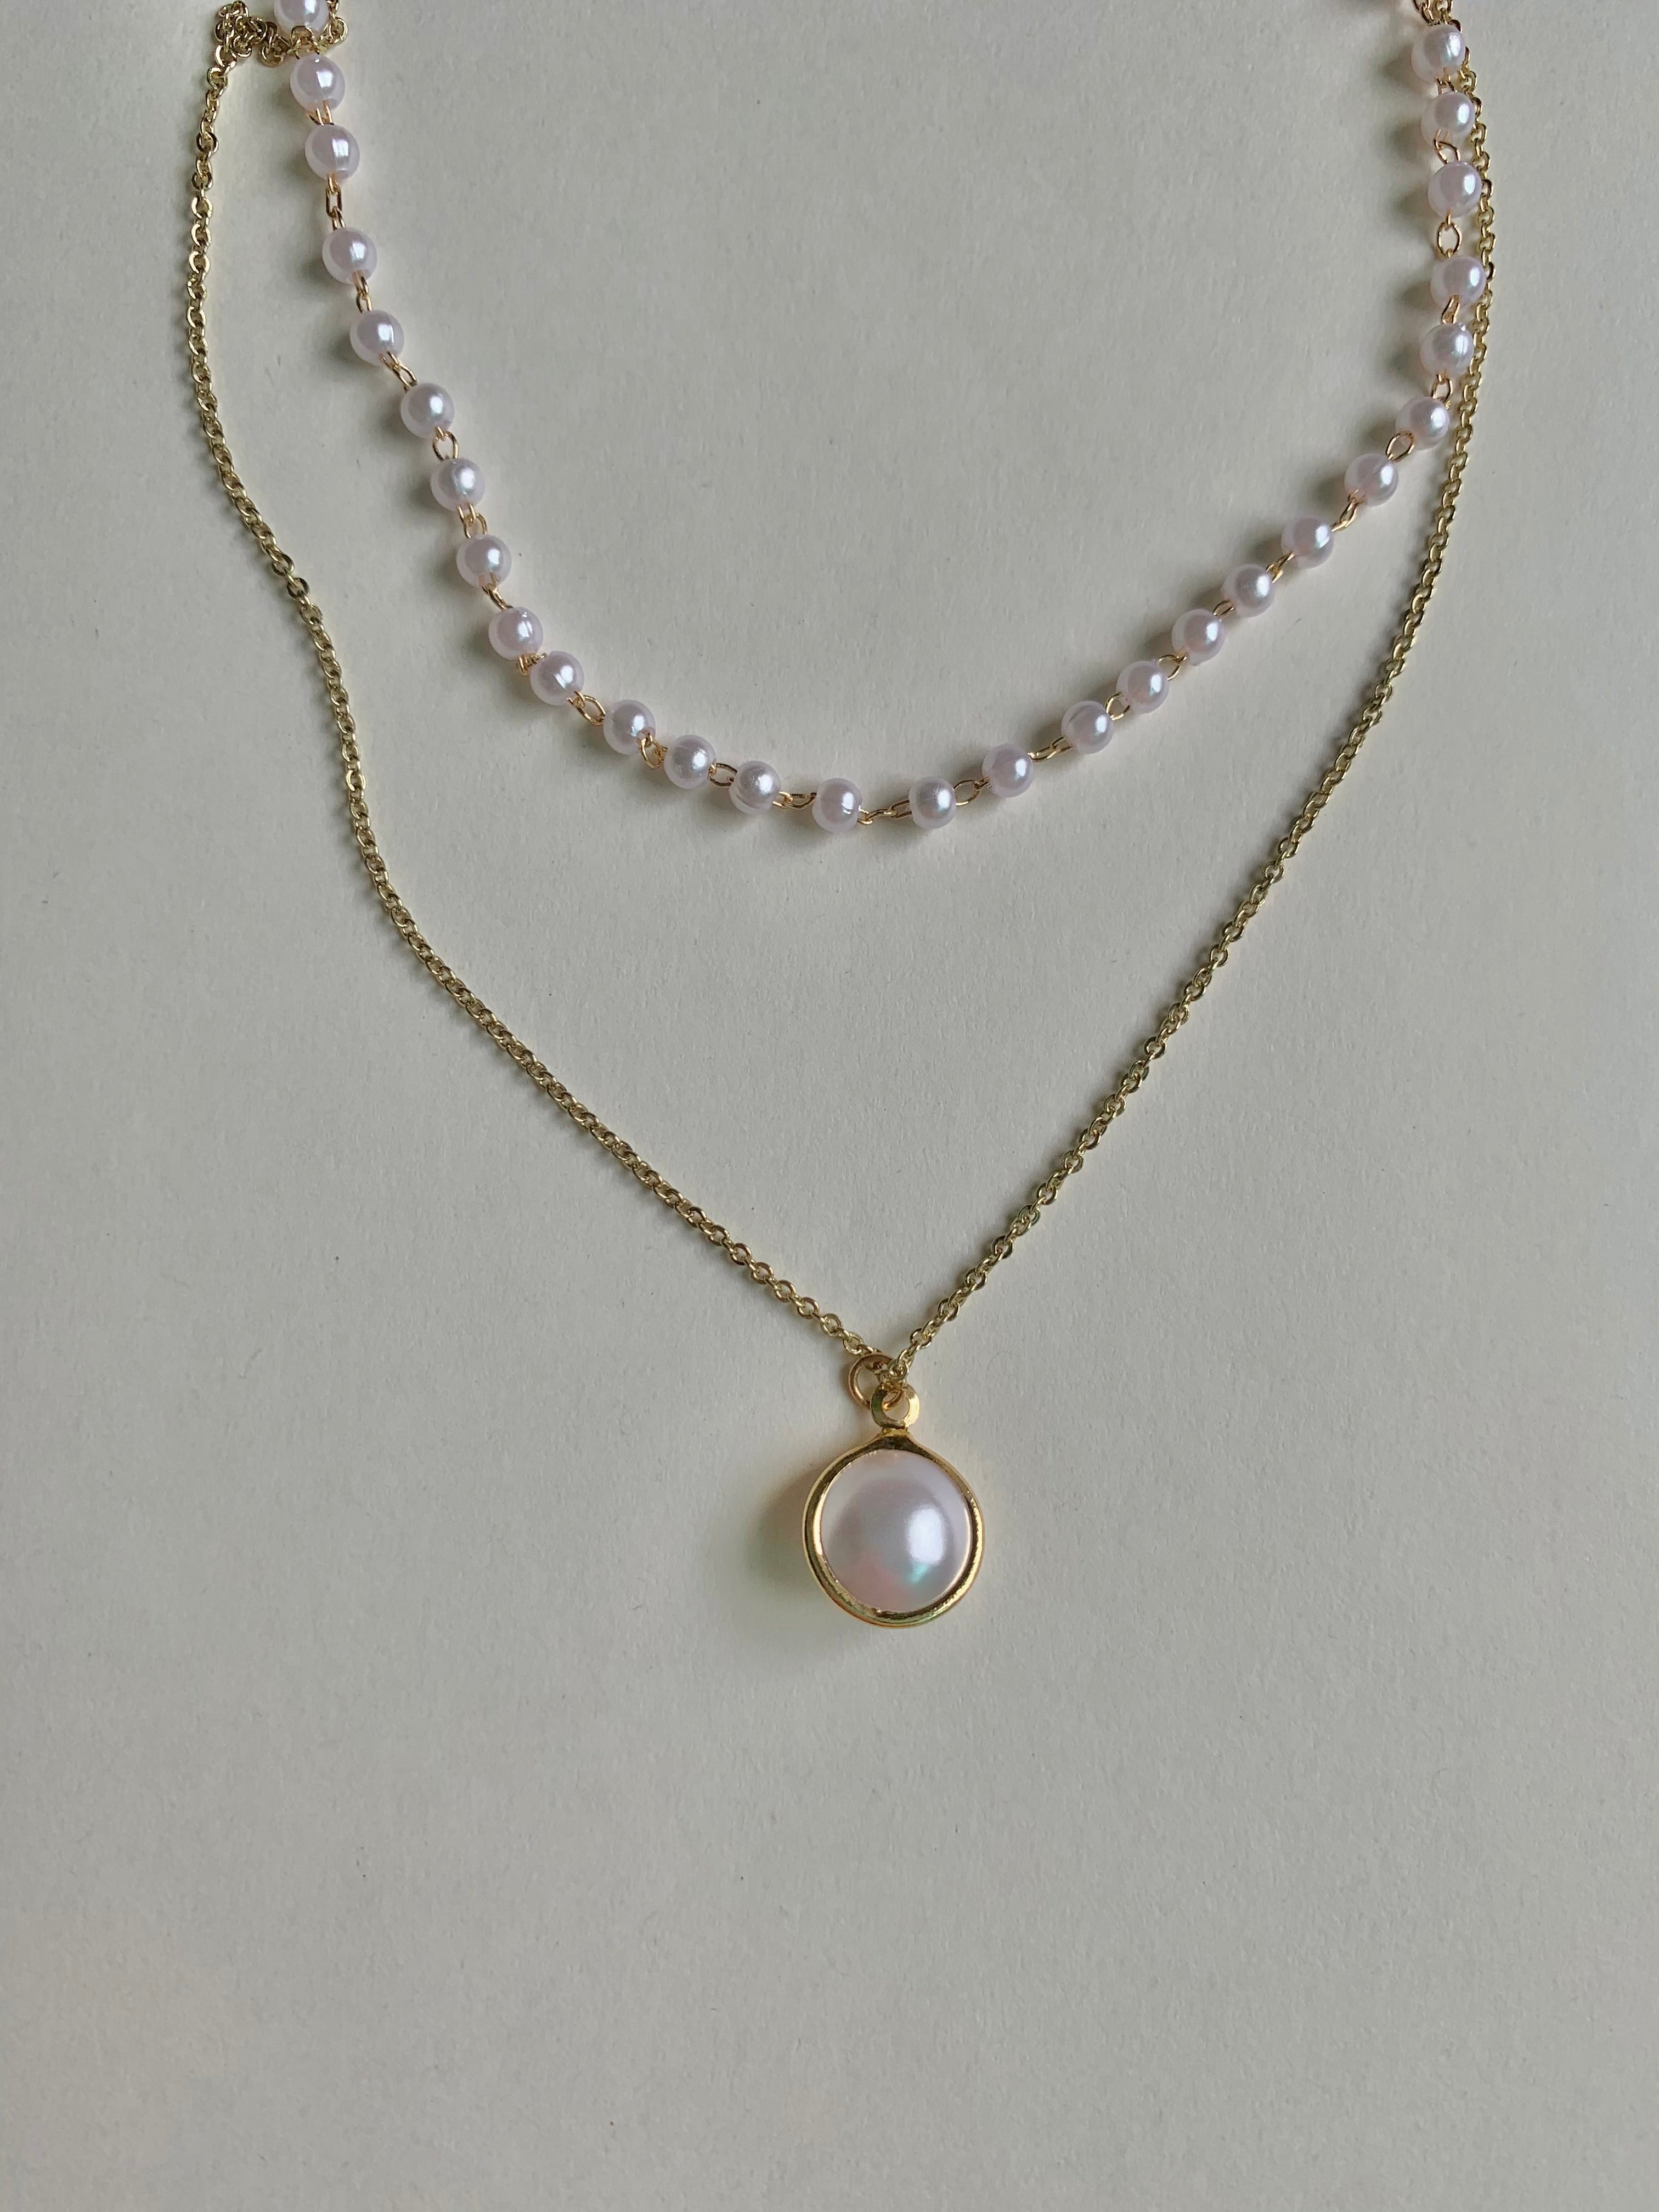 Collier superposé de perles